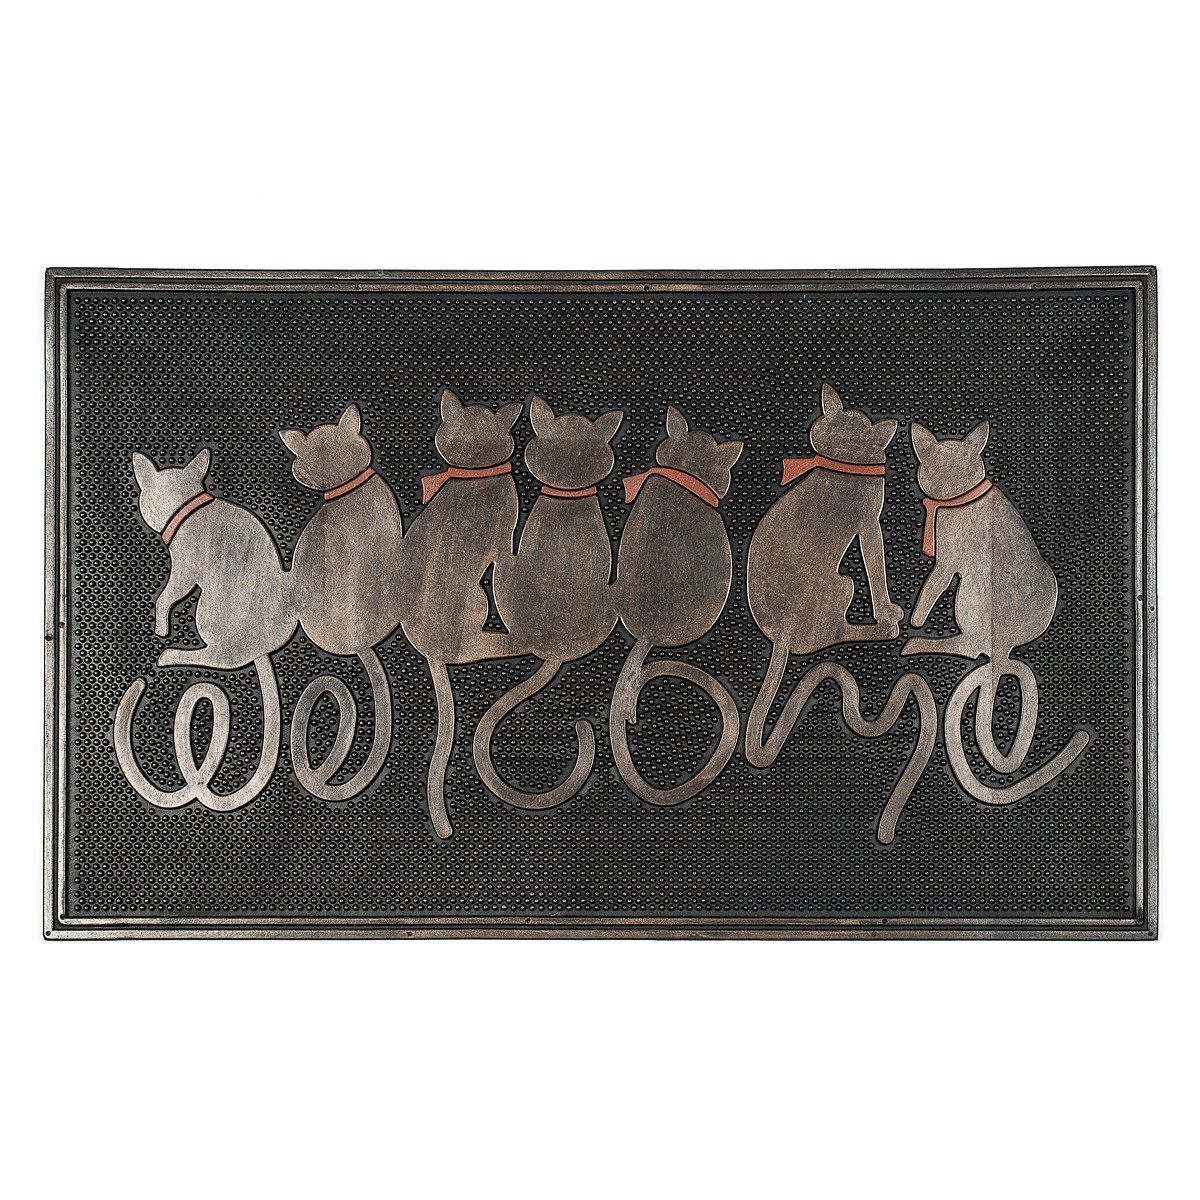 BO-MA Trading Venkovní rohožka Sedící kočky, 45 x 75 cm - 4home.cz